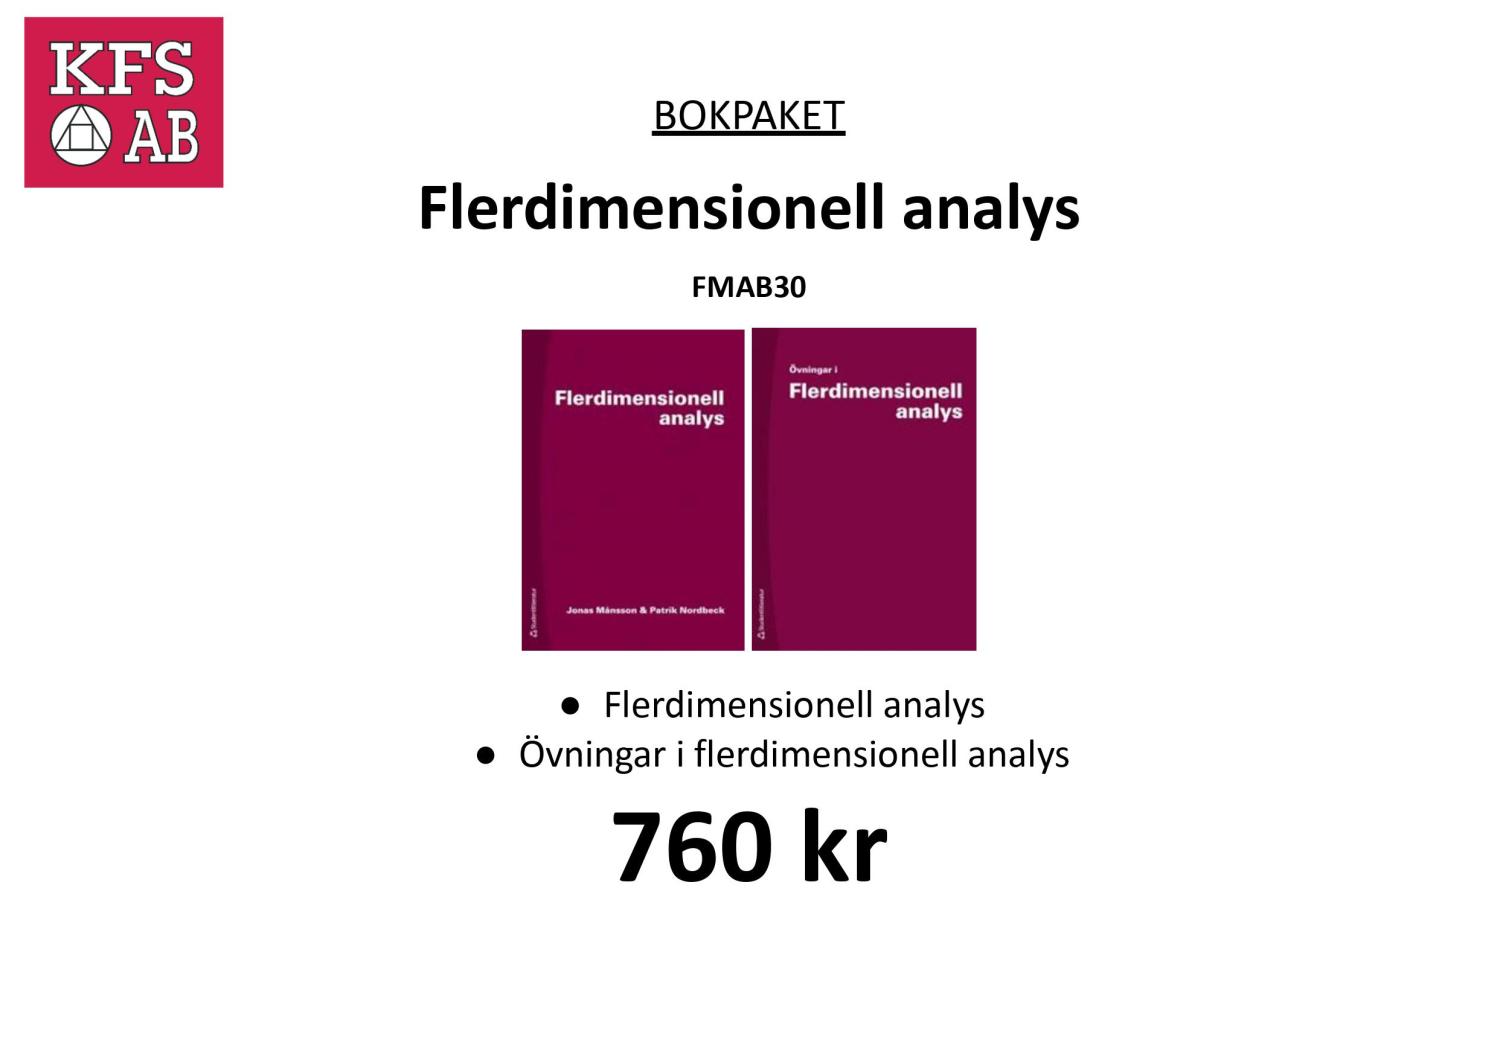 Bokpaket FMAB30 Flerdimensionell analys